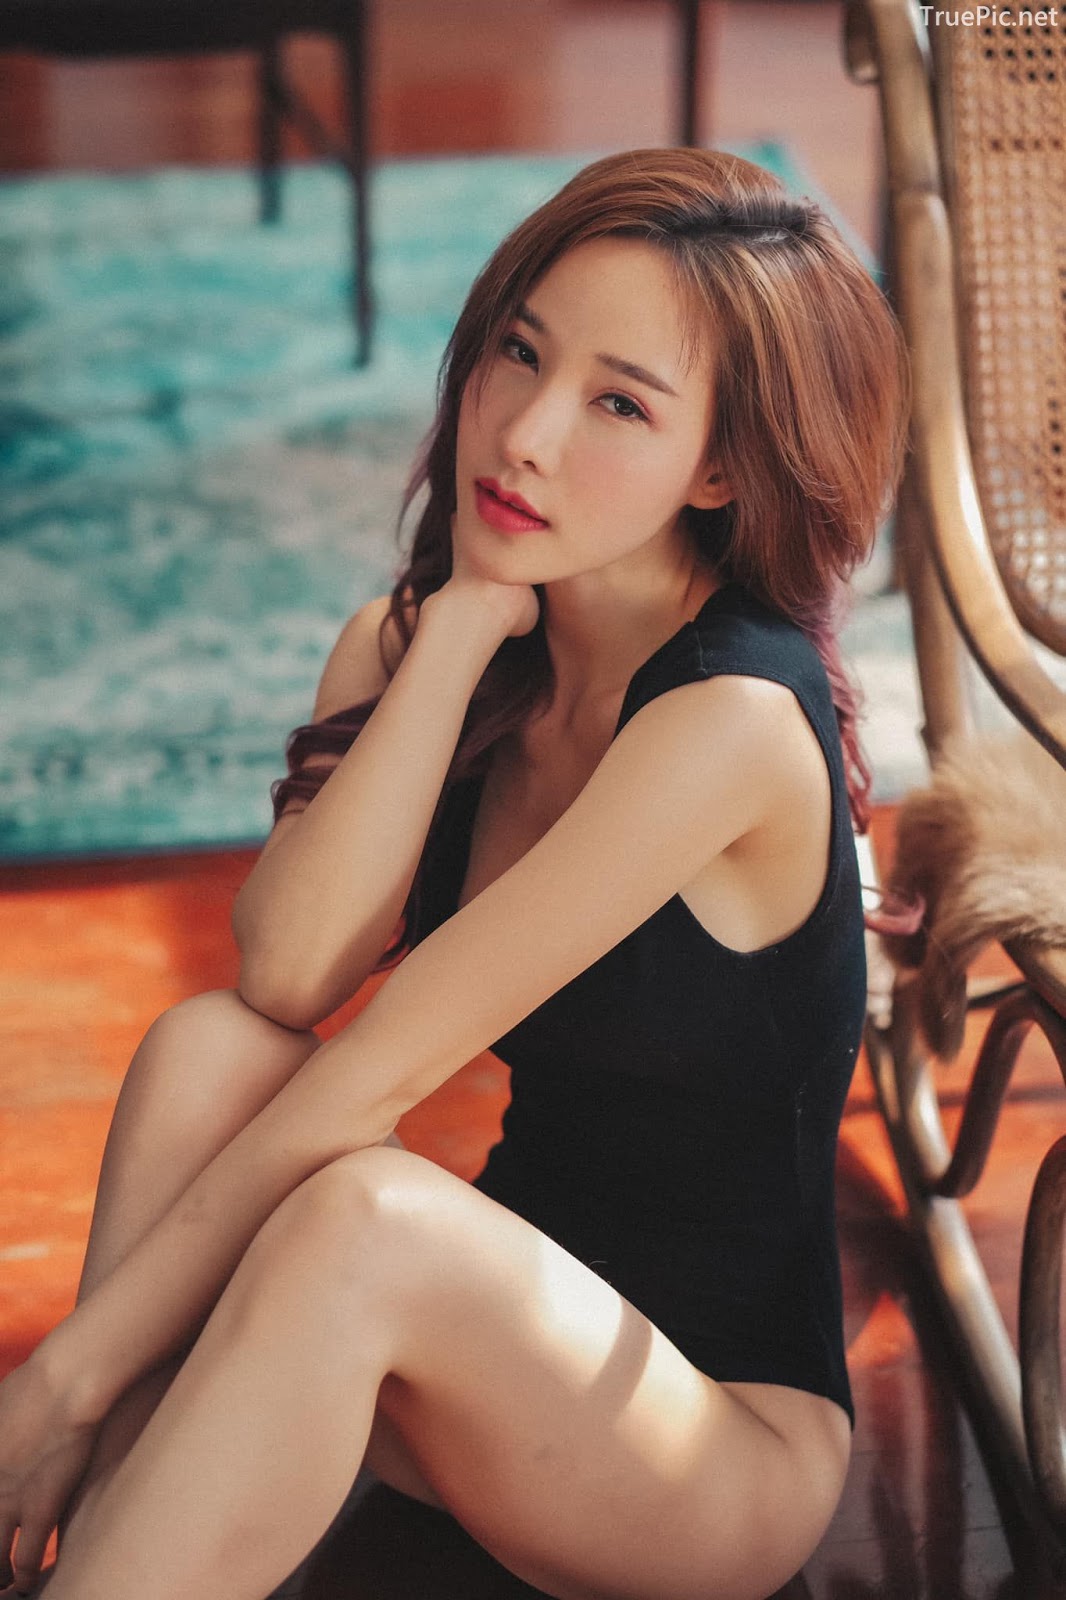 Thailand model - Arys Nam-in (Arysiacara) - Black Rose feeling the sun - Picture 19